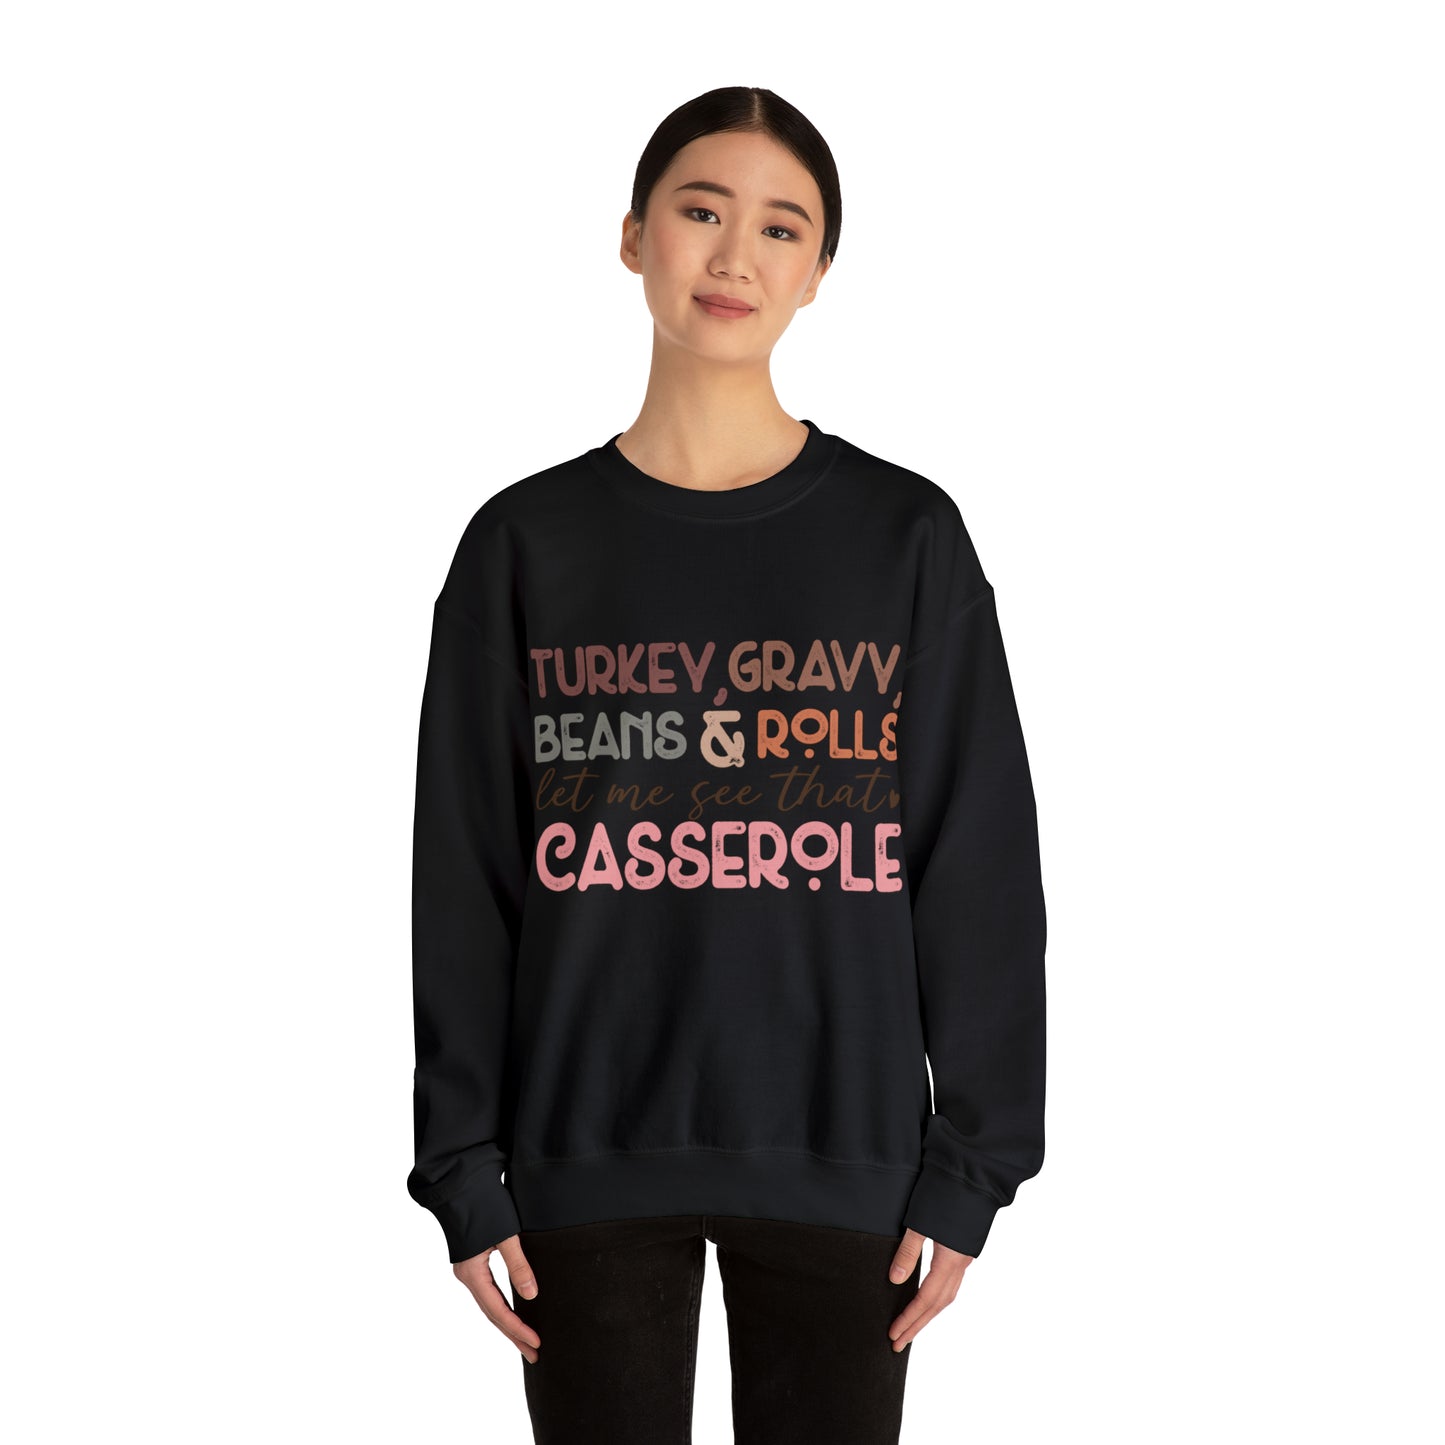 Turkey Gravy Beans & Rolls Let Me See That Casserole| Unisex Thanksgiving Sweatshirt